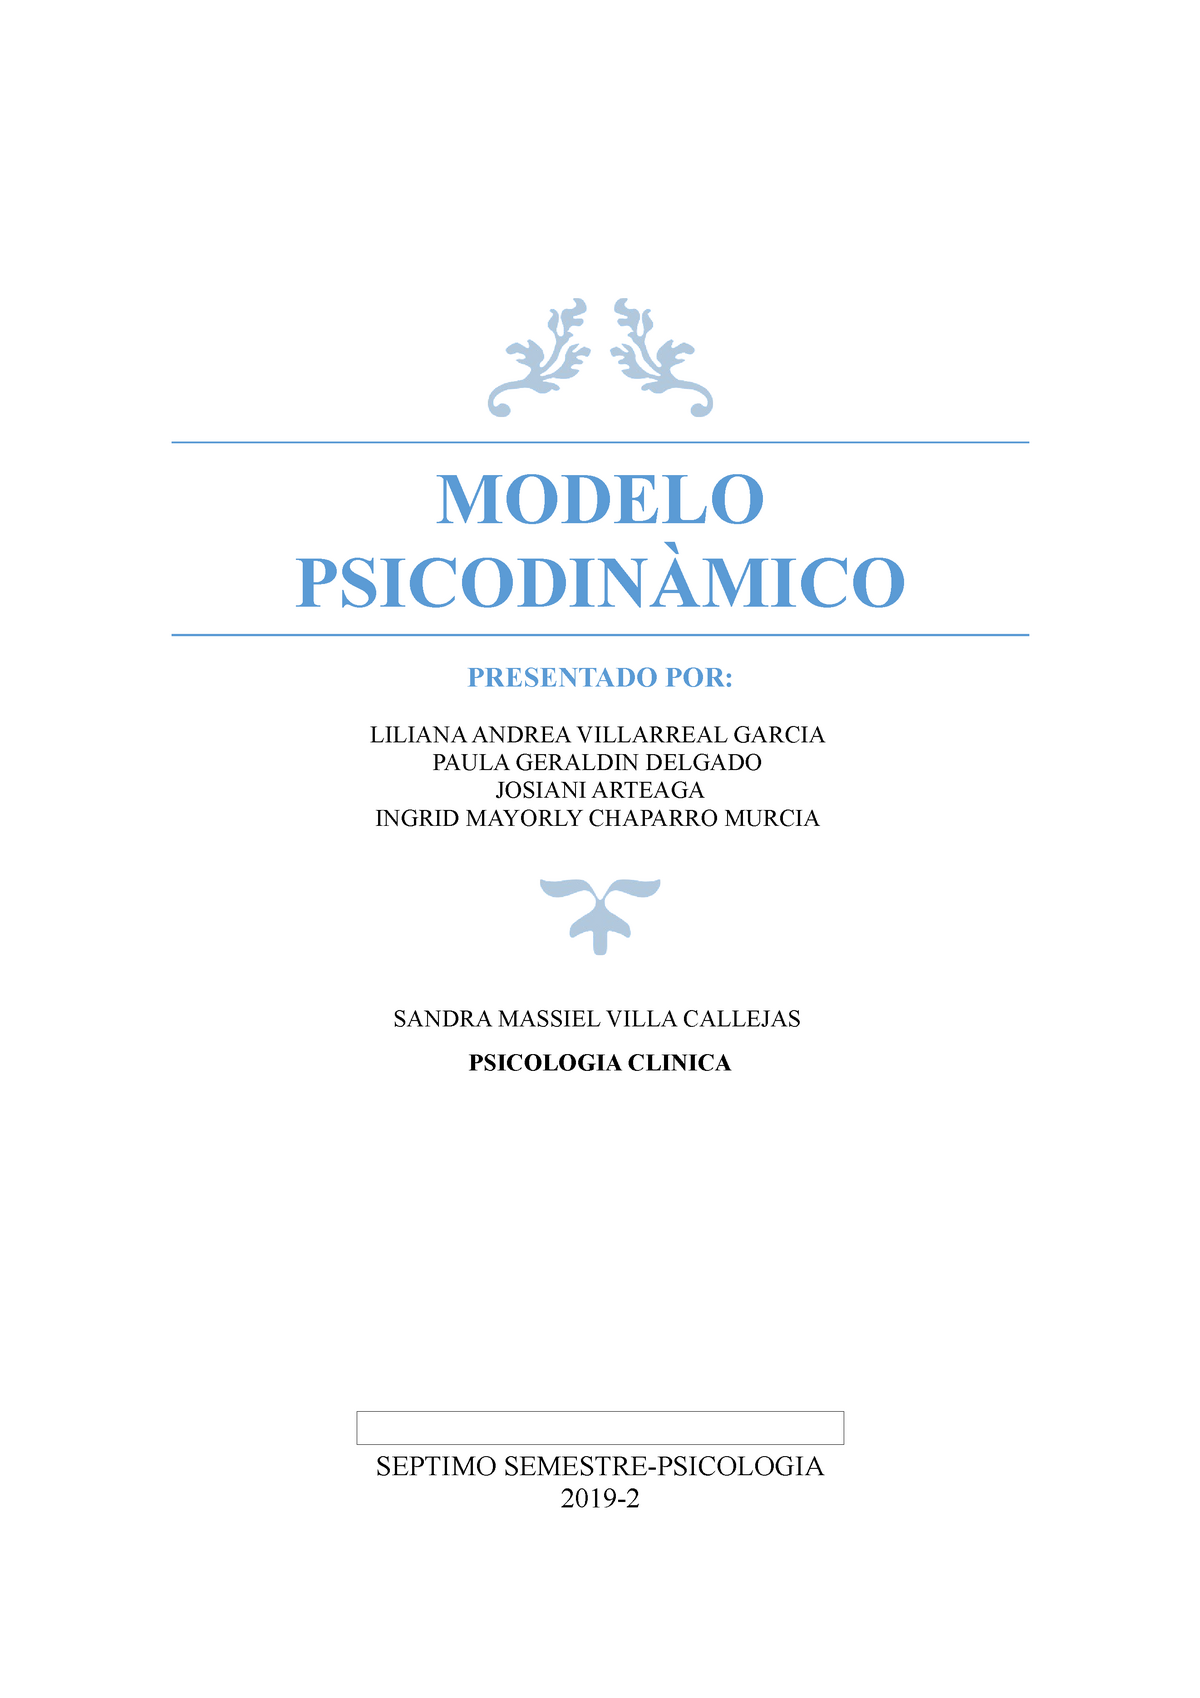 Modelo Psicodinámico - MODELO PSICODINÀMICO PRESENTADO POR: LILIANA ANDREA  VILLARREAL GARCIA PAULA - Studocu